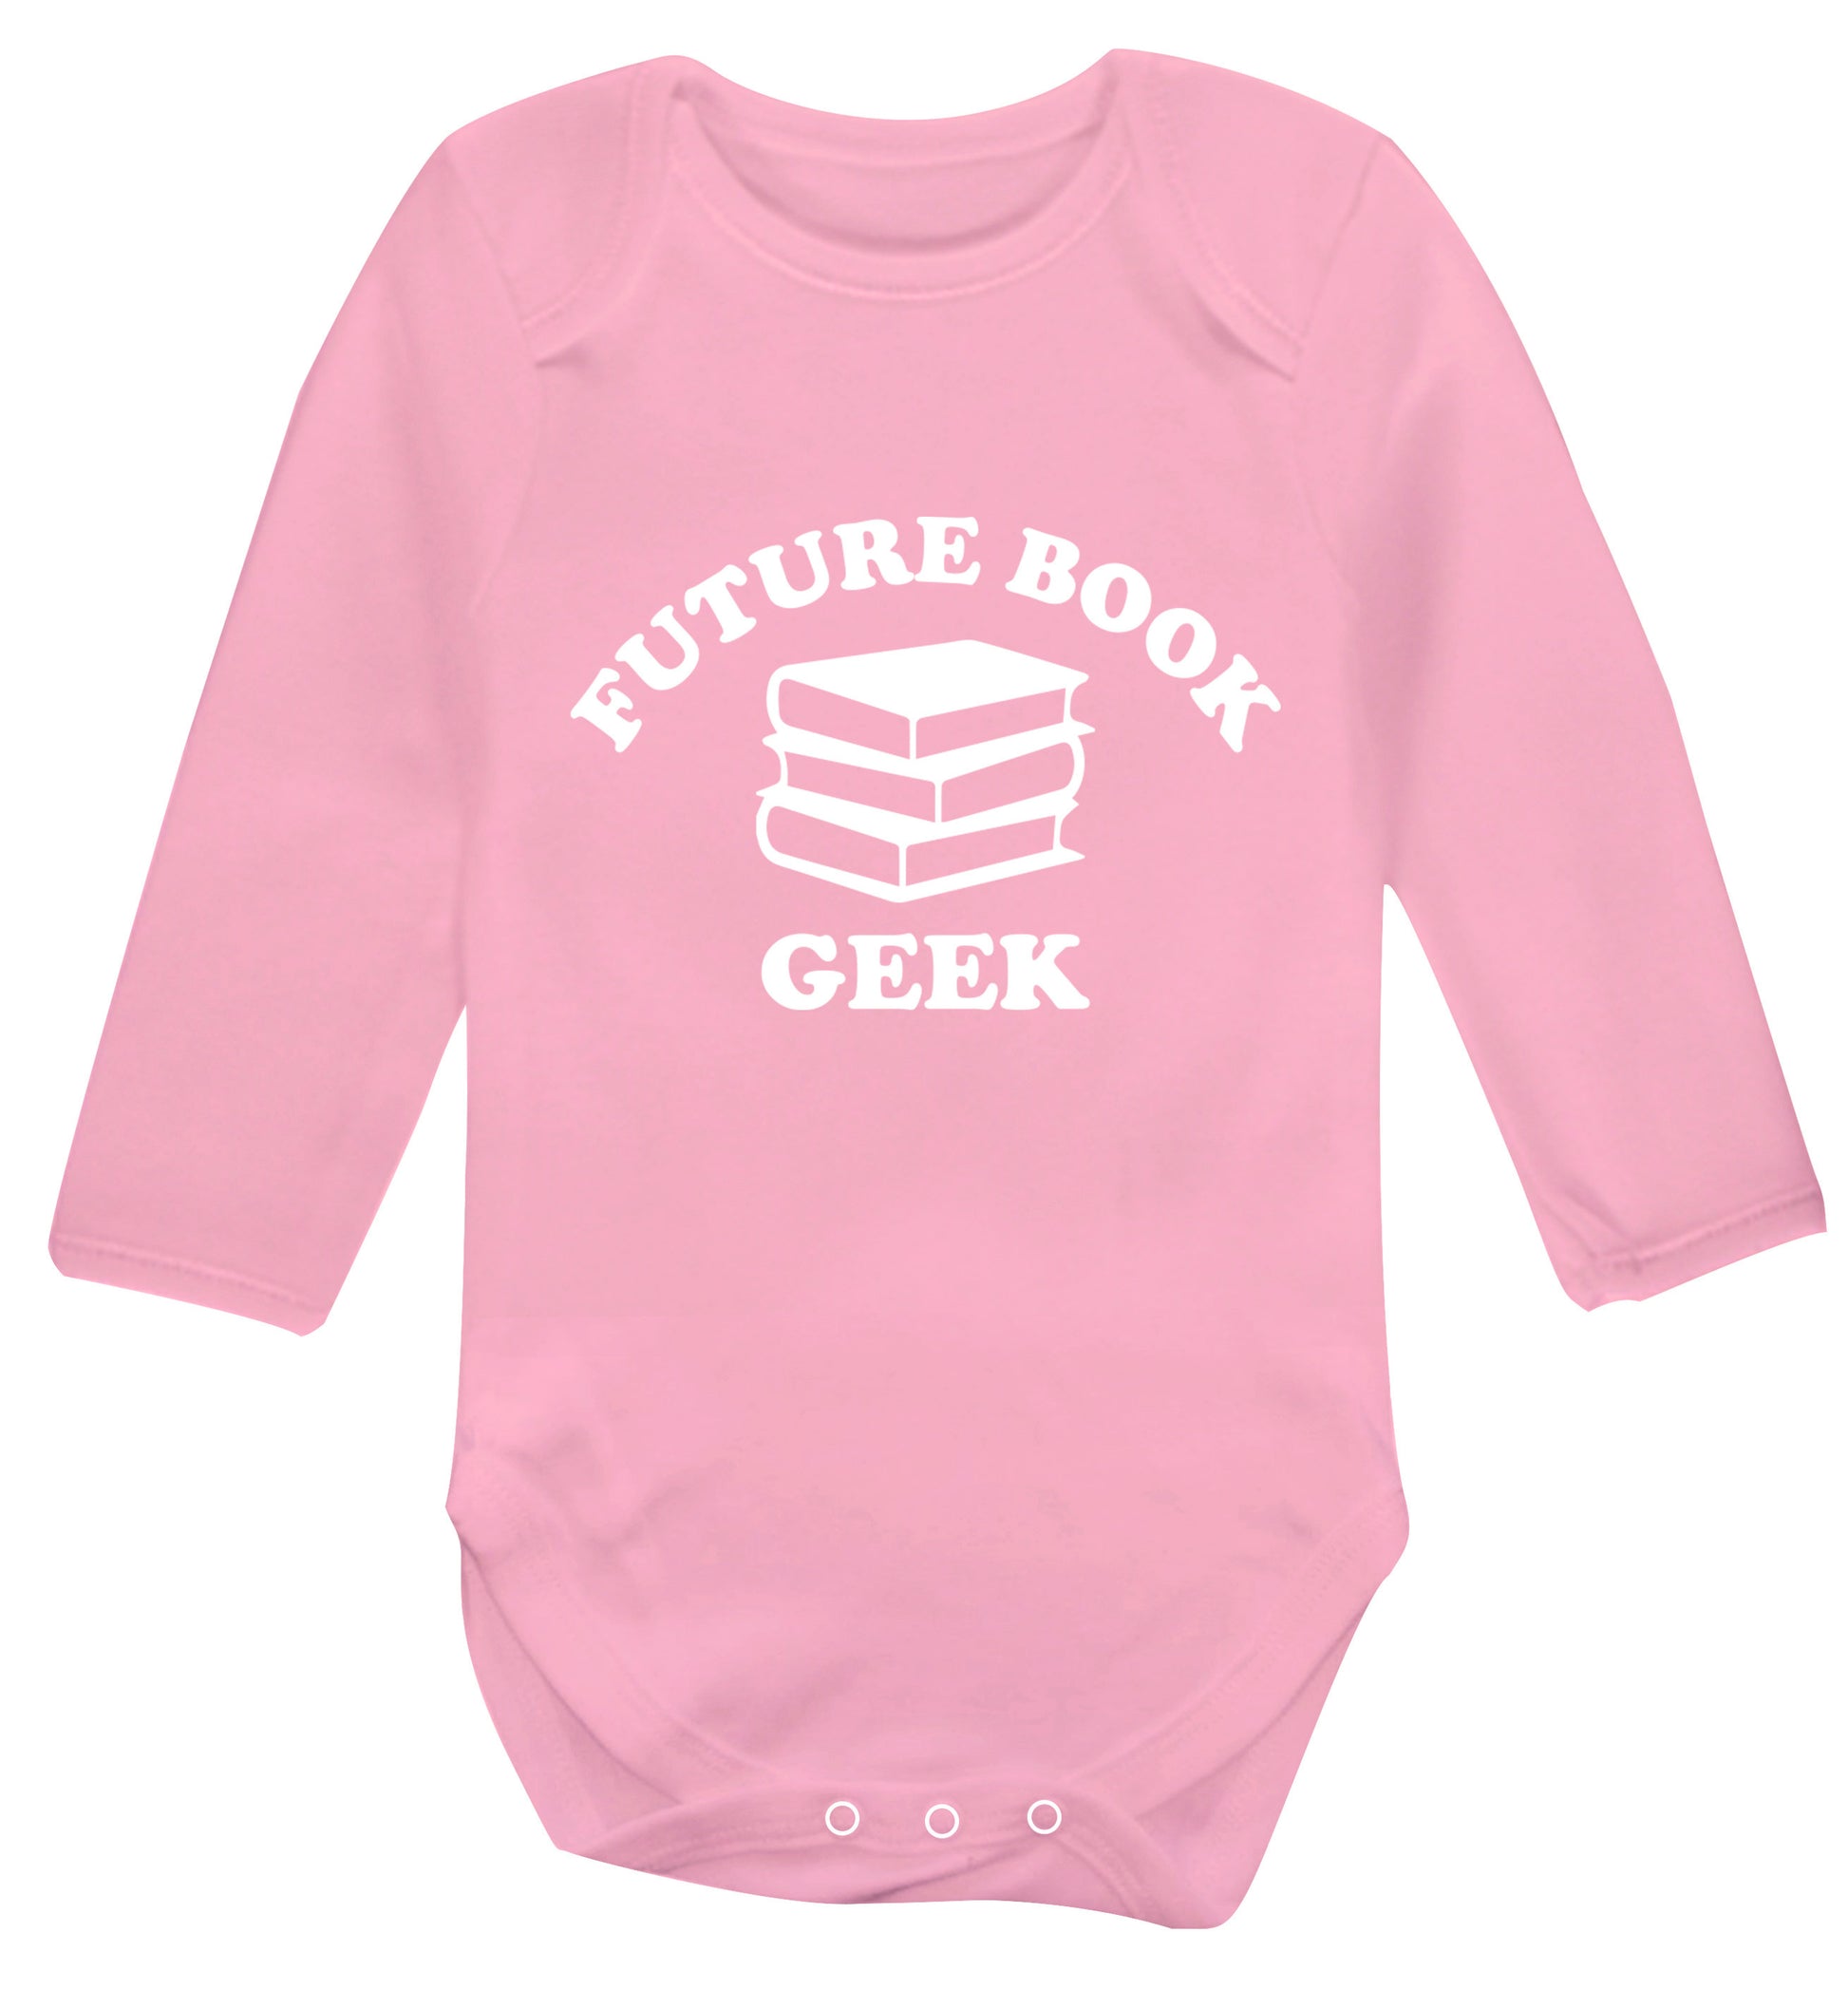 Future book geek Baby Vest long sleeved pale pink 6-12 months